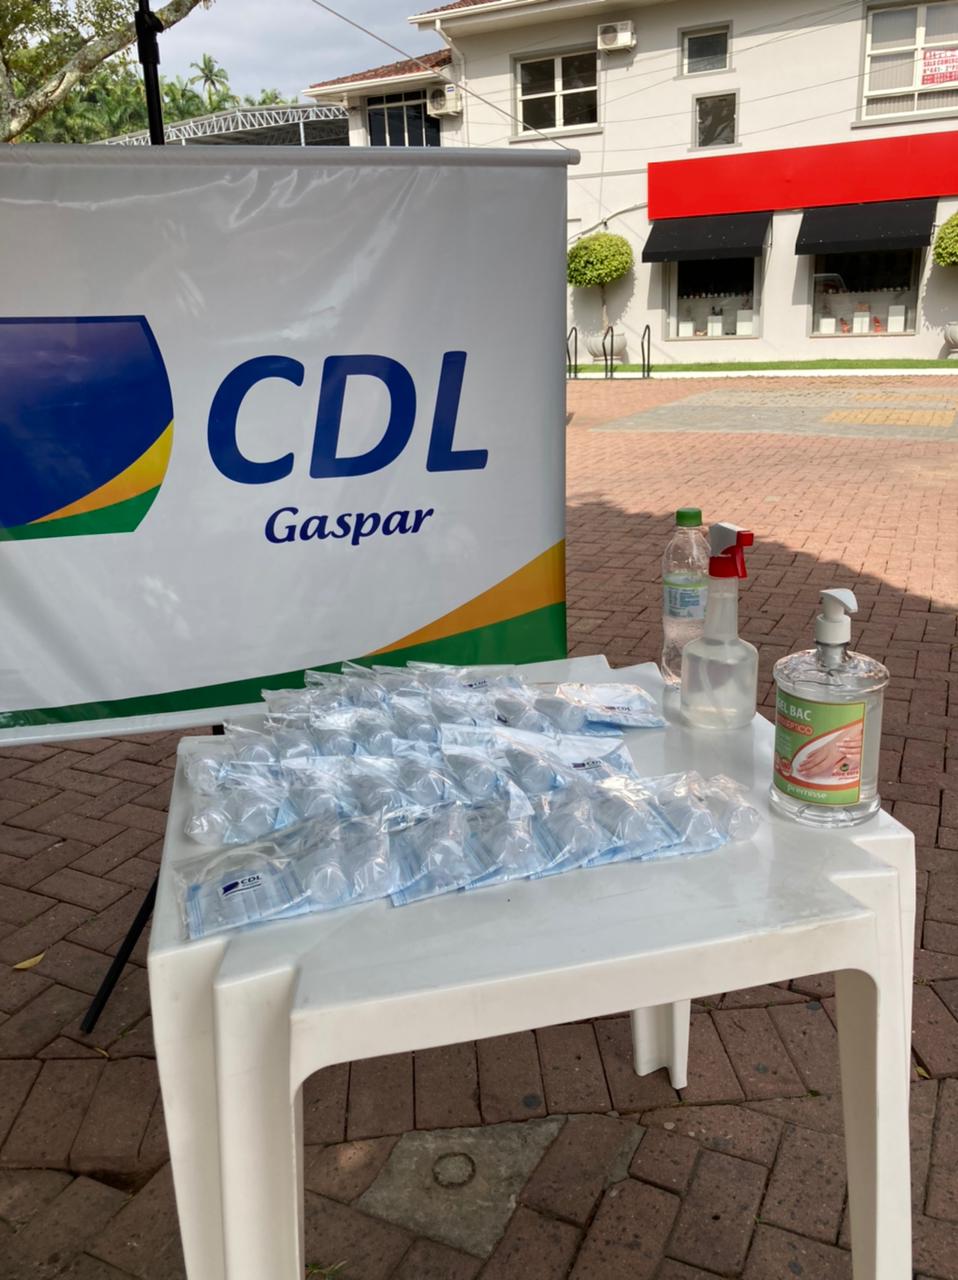 CDL de Gaspar distribui mil kits de máscaras e álcool em gel